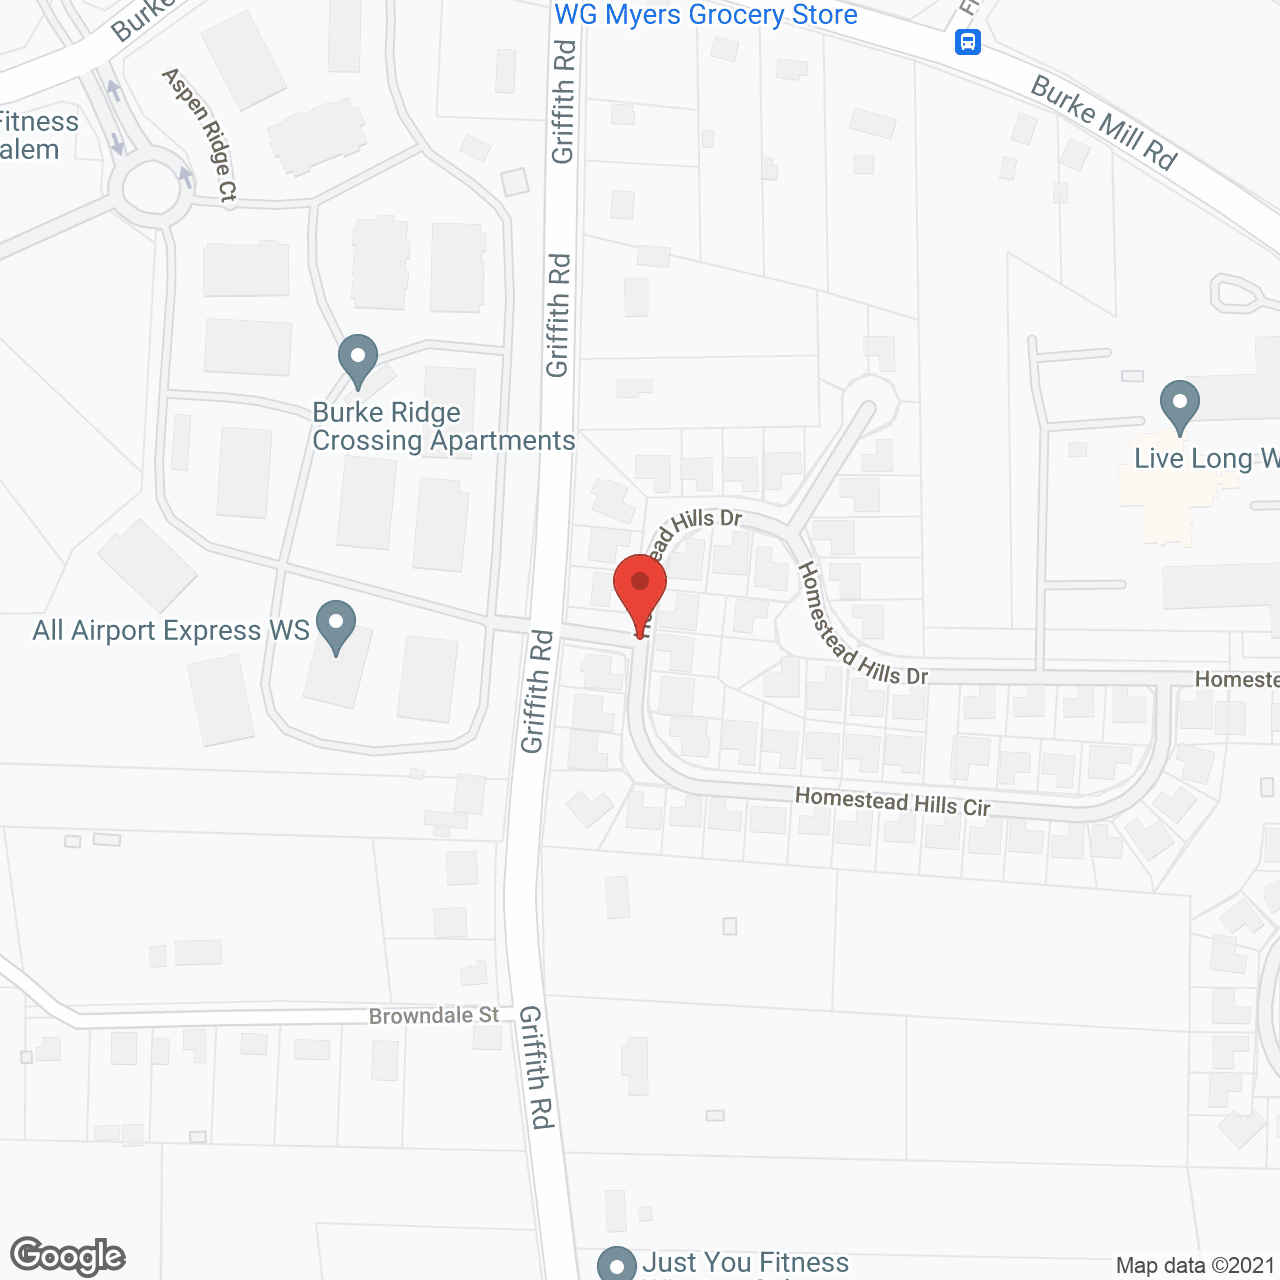 Homestead Hills in google map